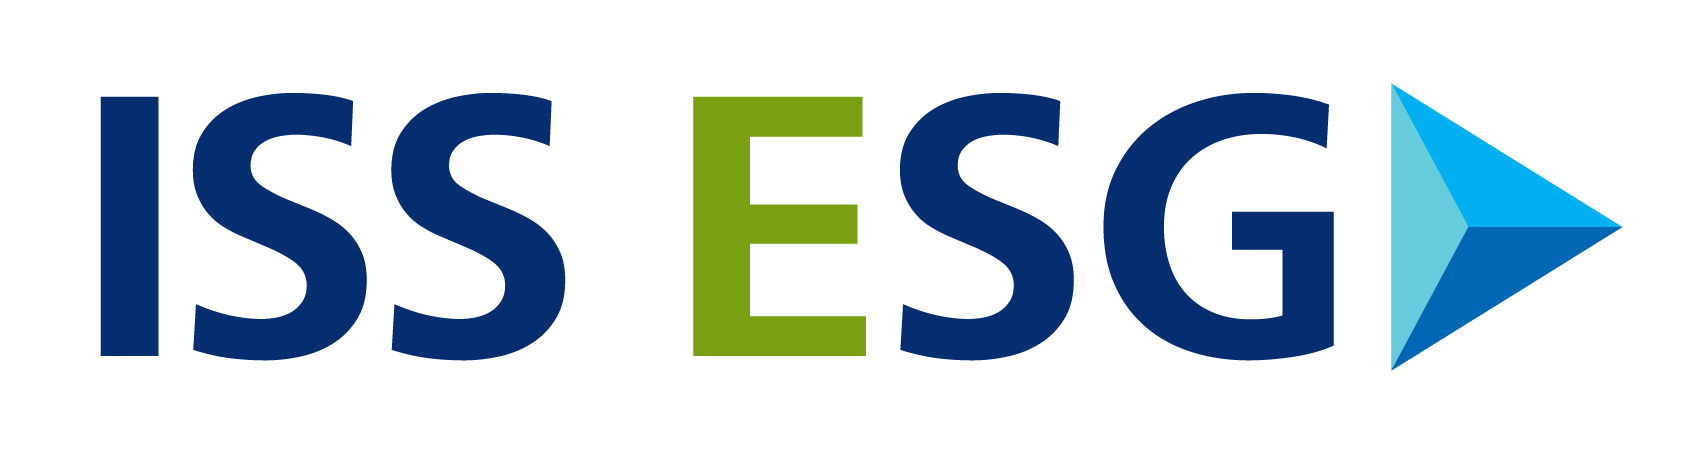 Esg s. ESG. ESG проекты. ESG картинки. ESG logo.